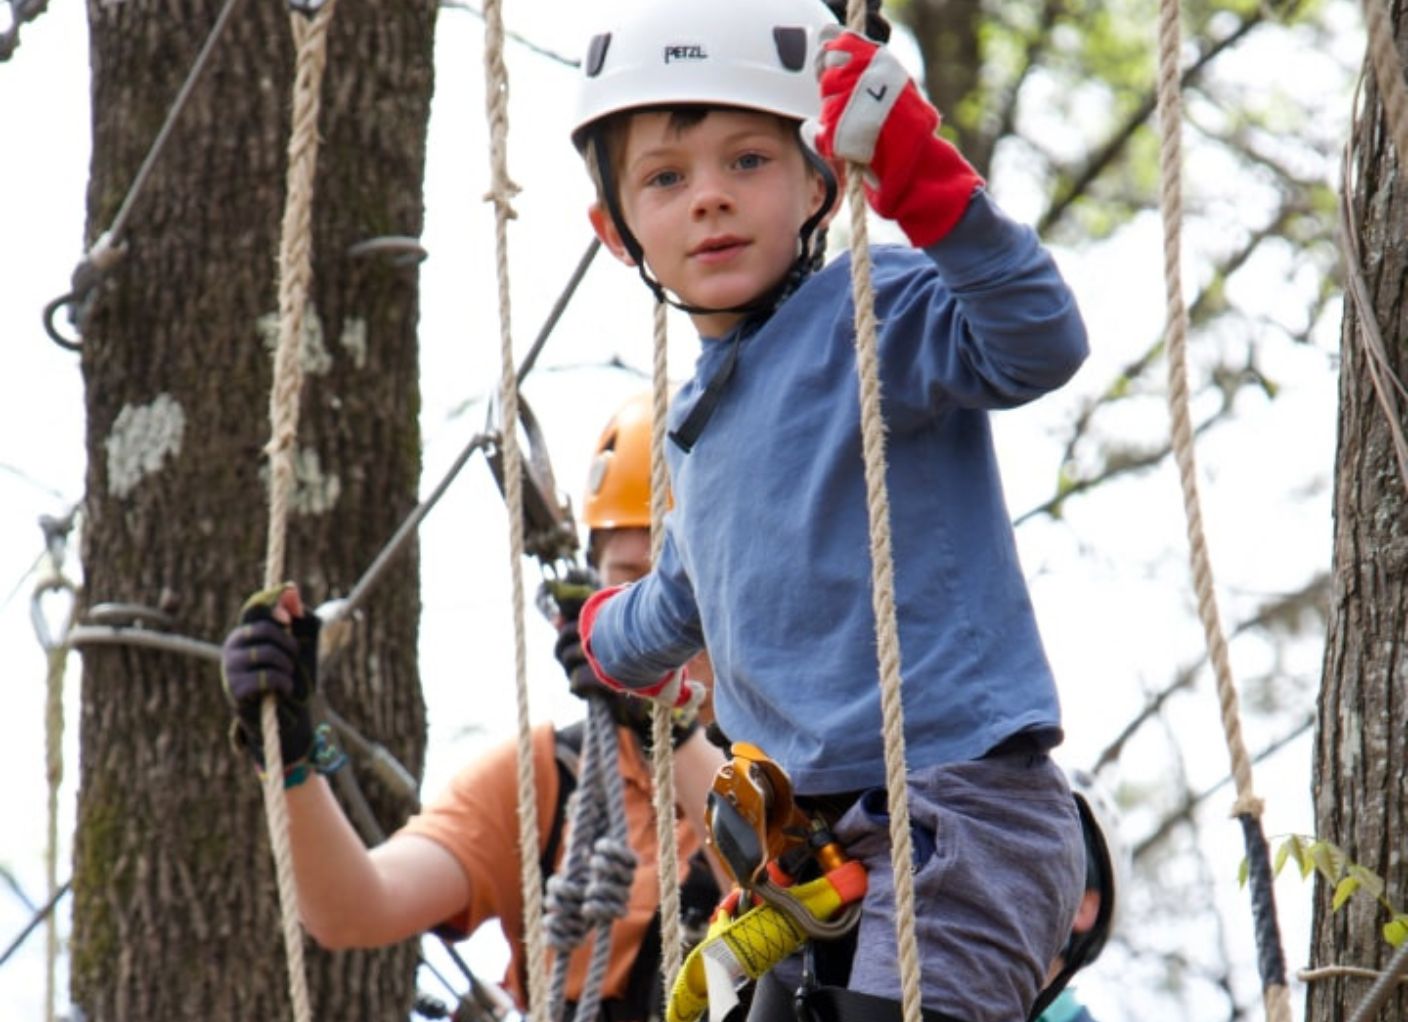 kids on aerial adventure challenge course and zipline